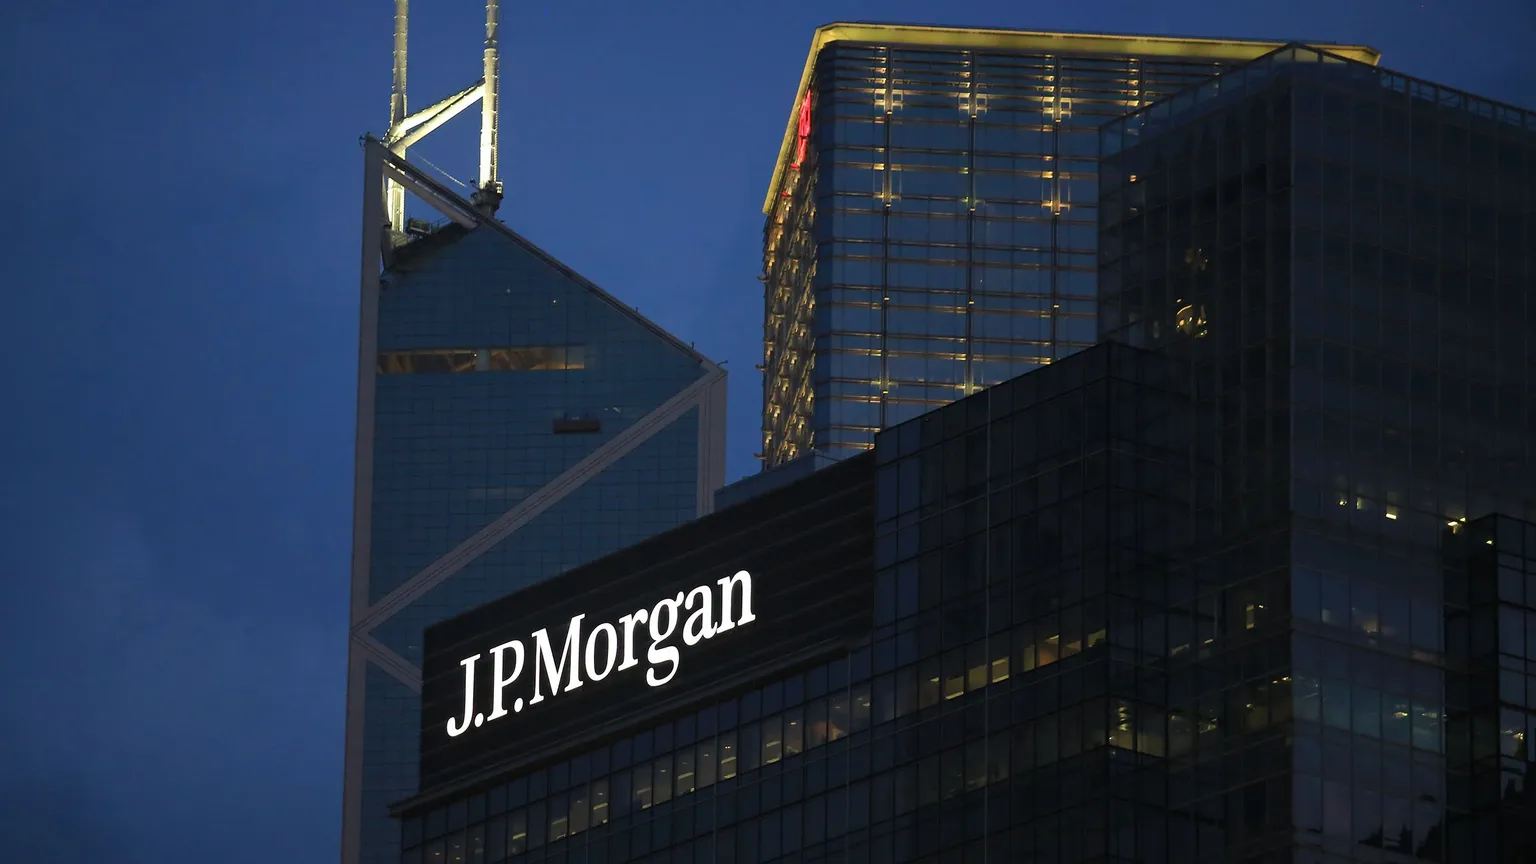 The JP Morgan building in Hong Kong. Image: Lewis Tse/Shutterstock.com